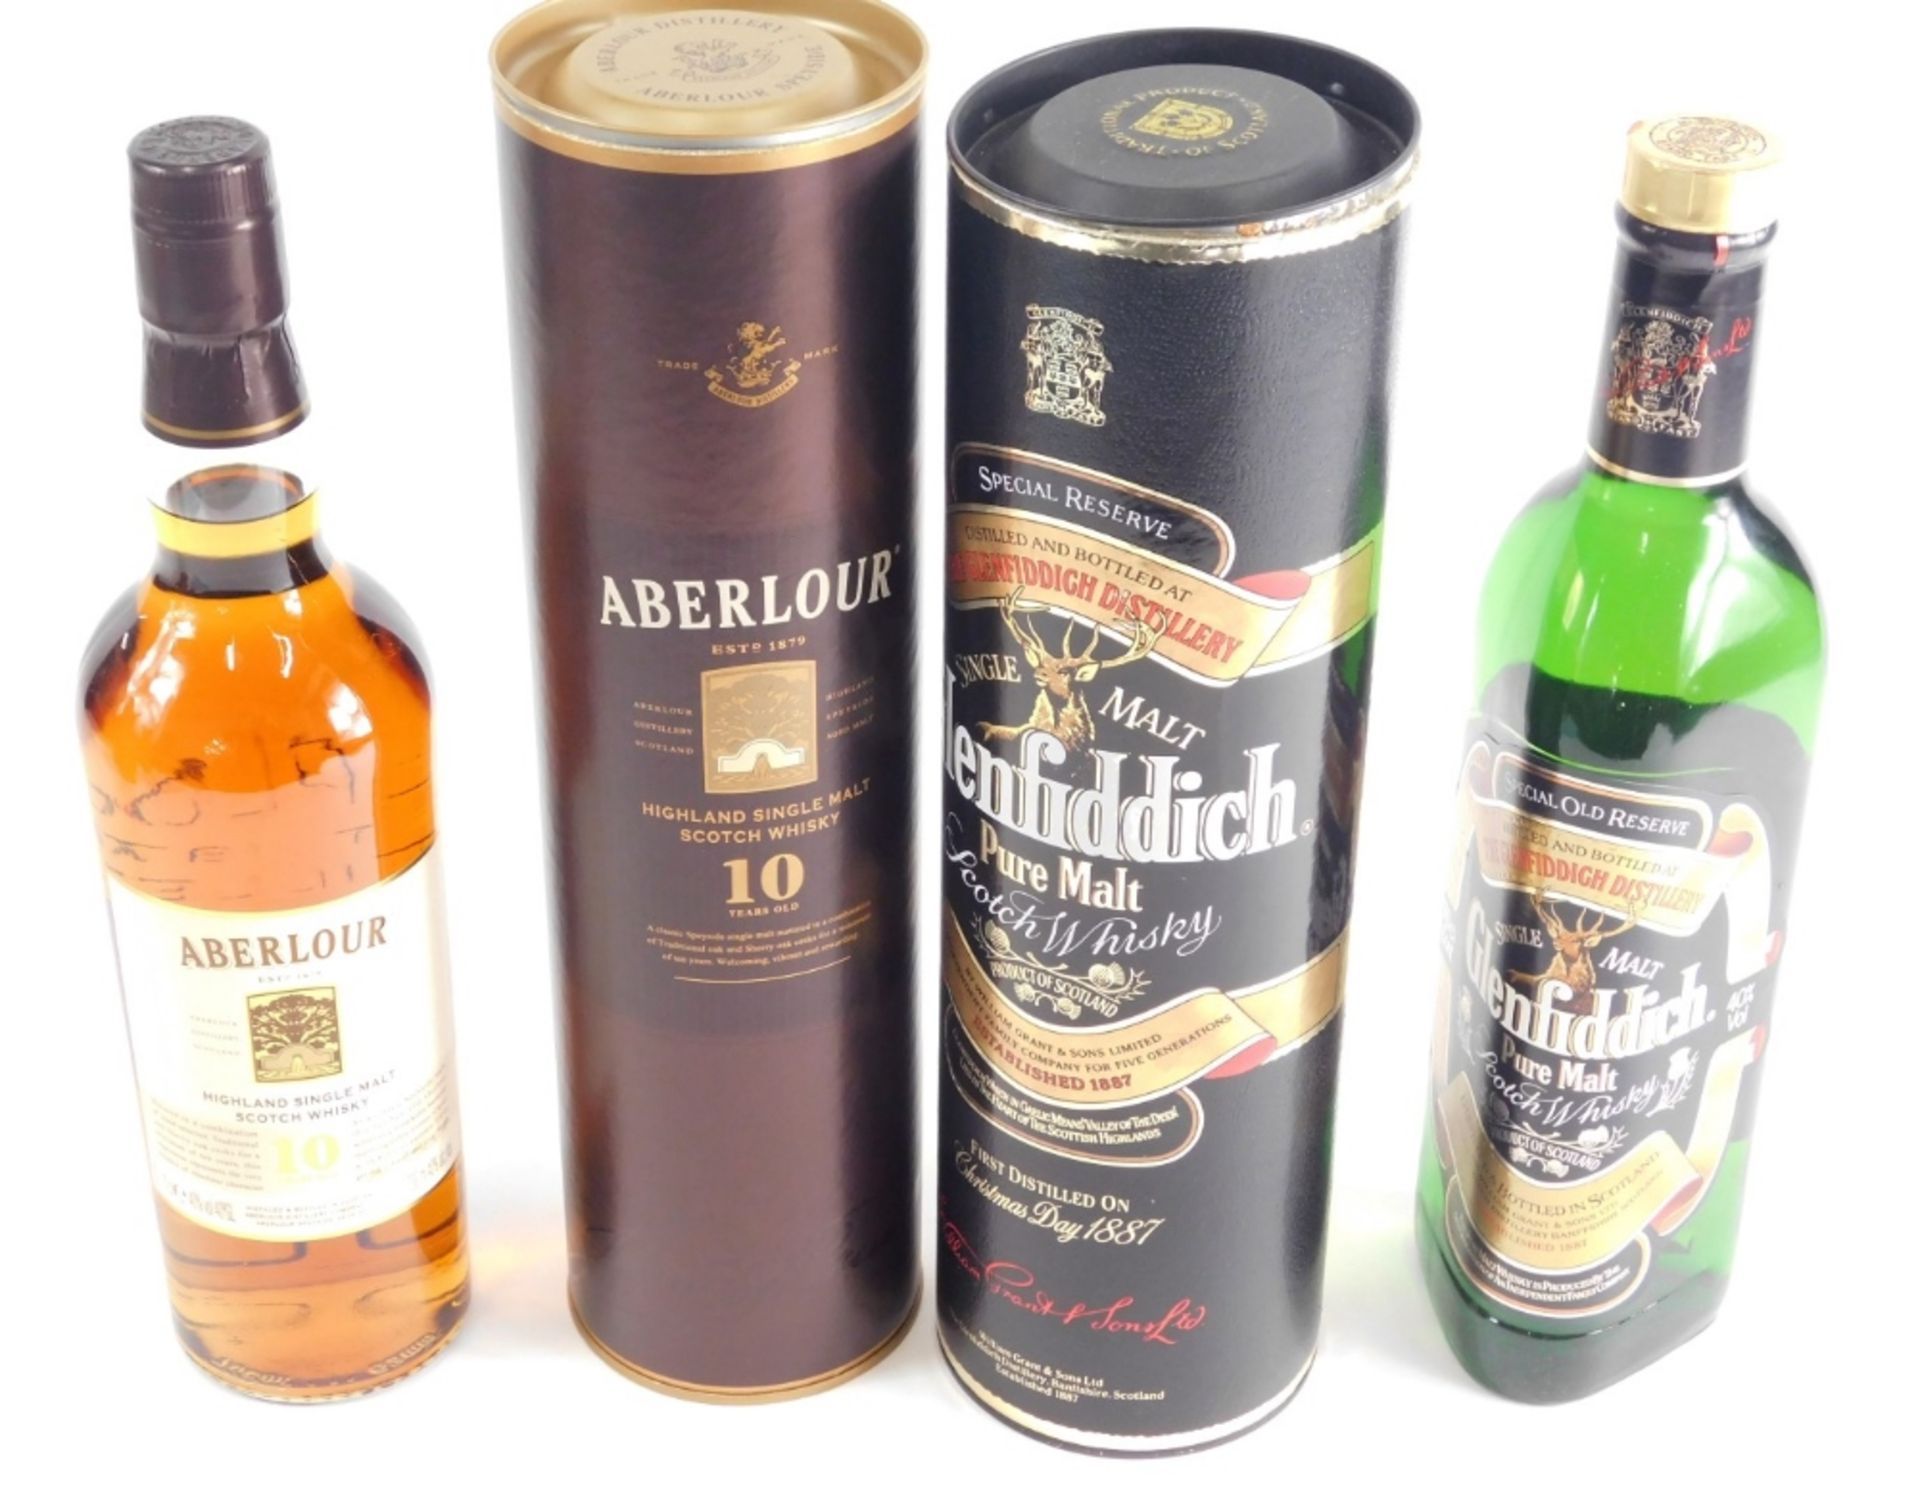 A bottle of Glenfiddich, in cardboard tube, and a bottle of Aberlour ten year old single malt Scotch